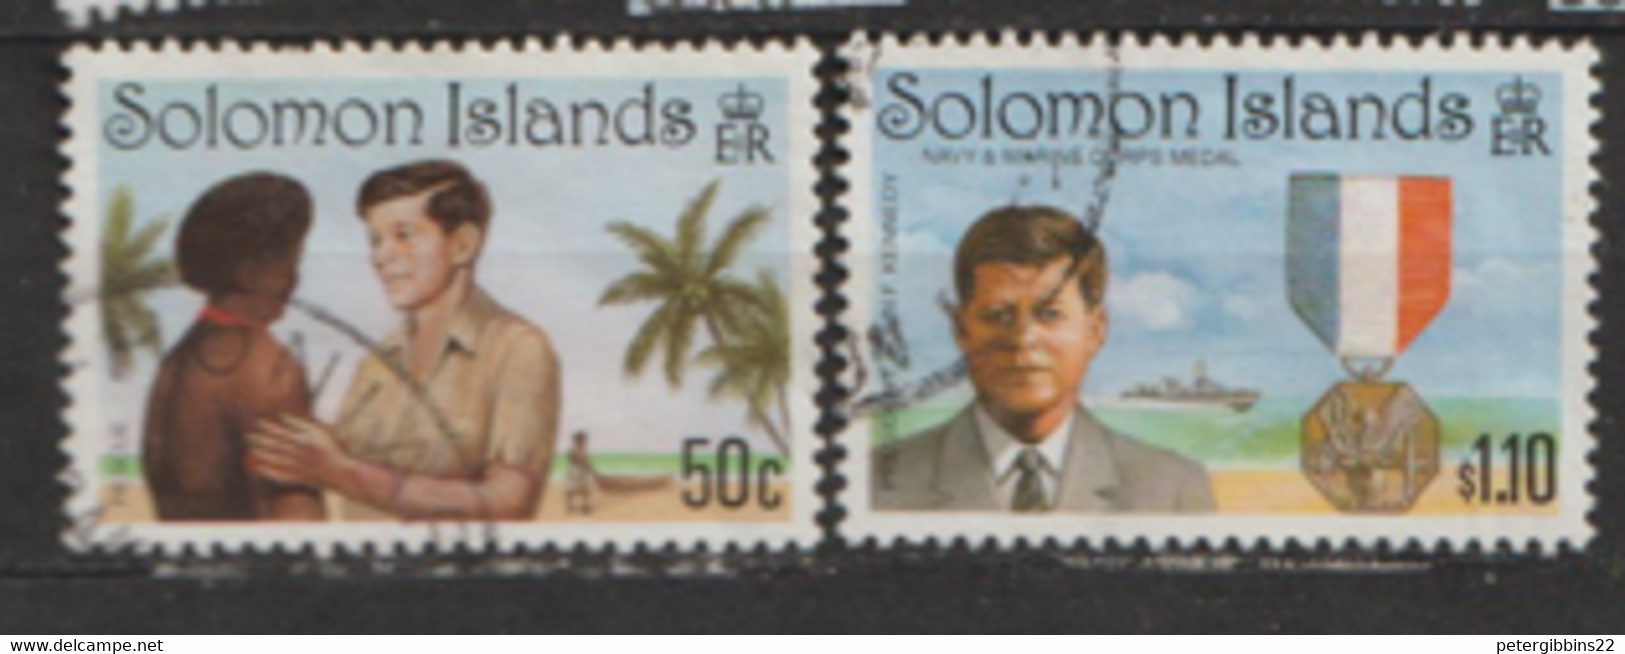 Solomon Islands  1993  SG 776-8  Kennedy  Fine Used - Salomoninseln